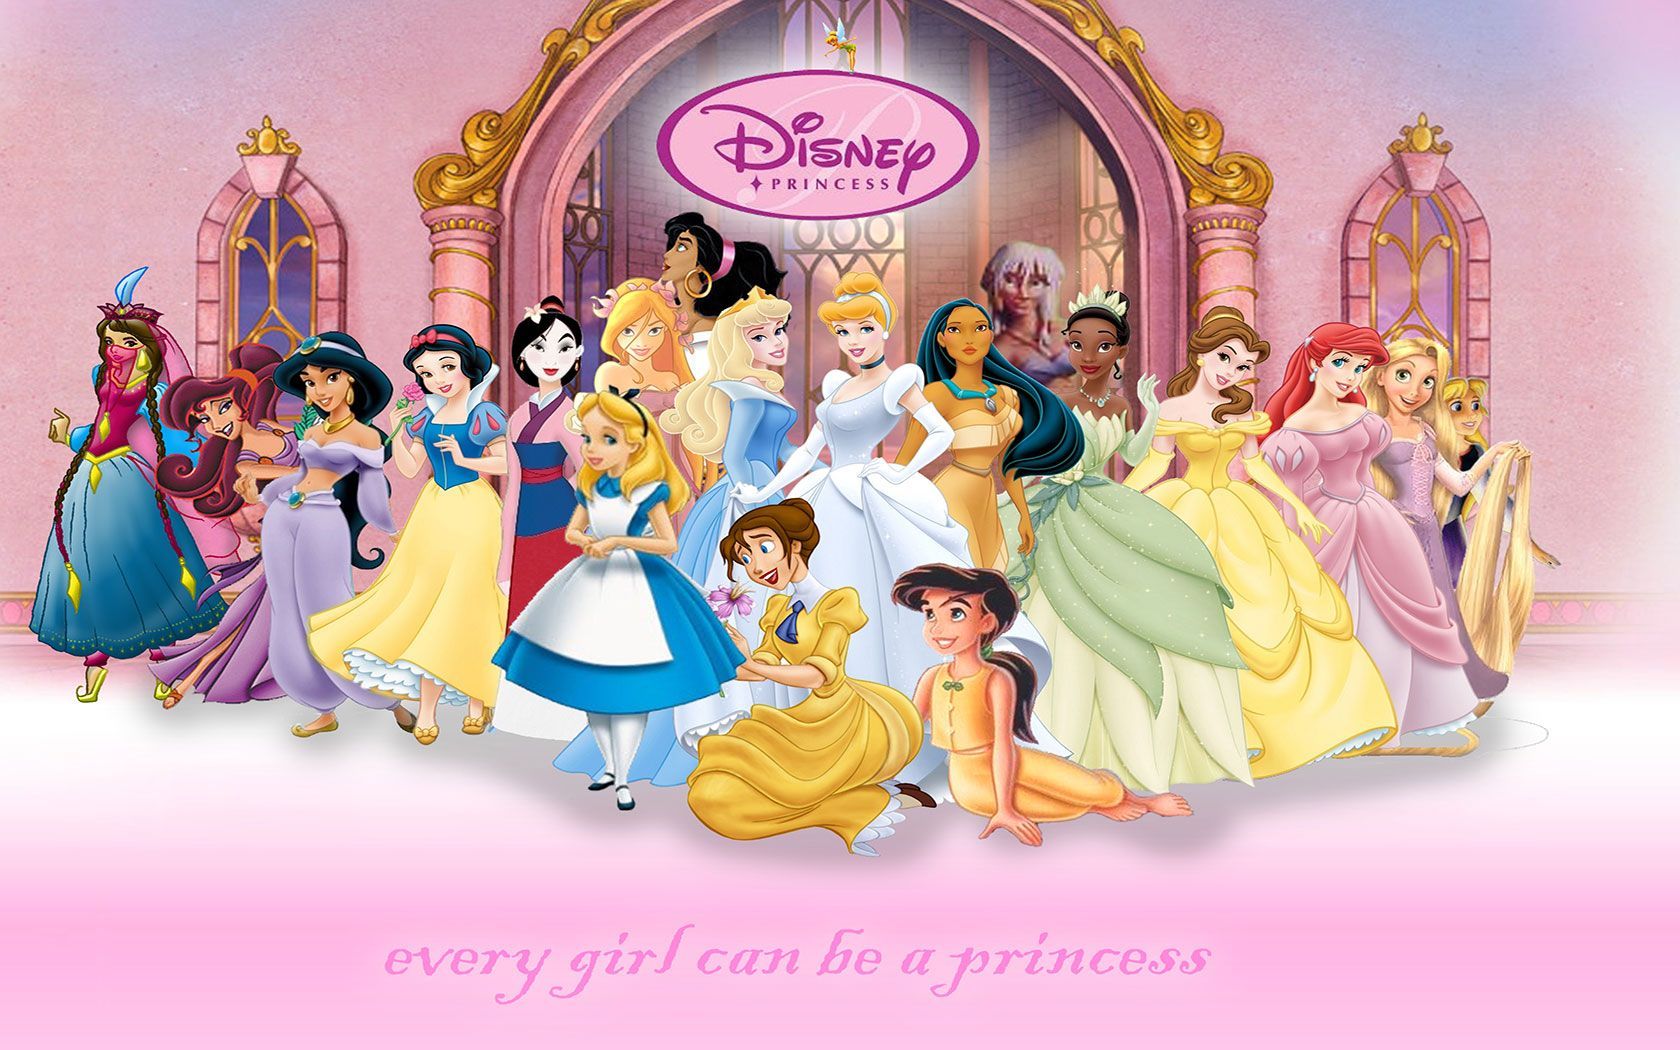 Disney princess wallpapers